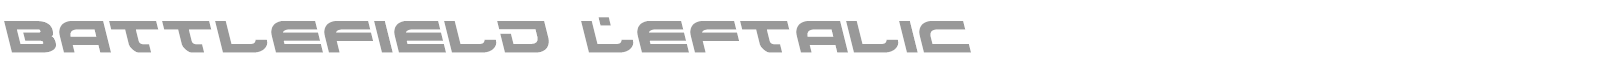 Battlefield Semi-Italic font preview